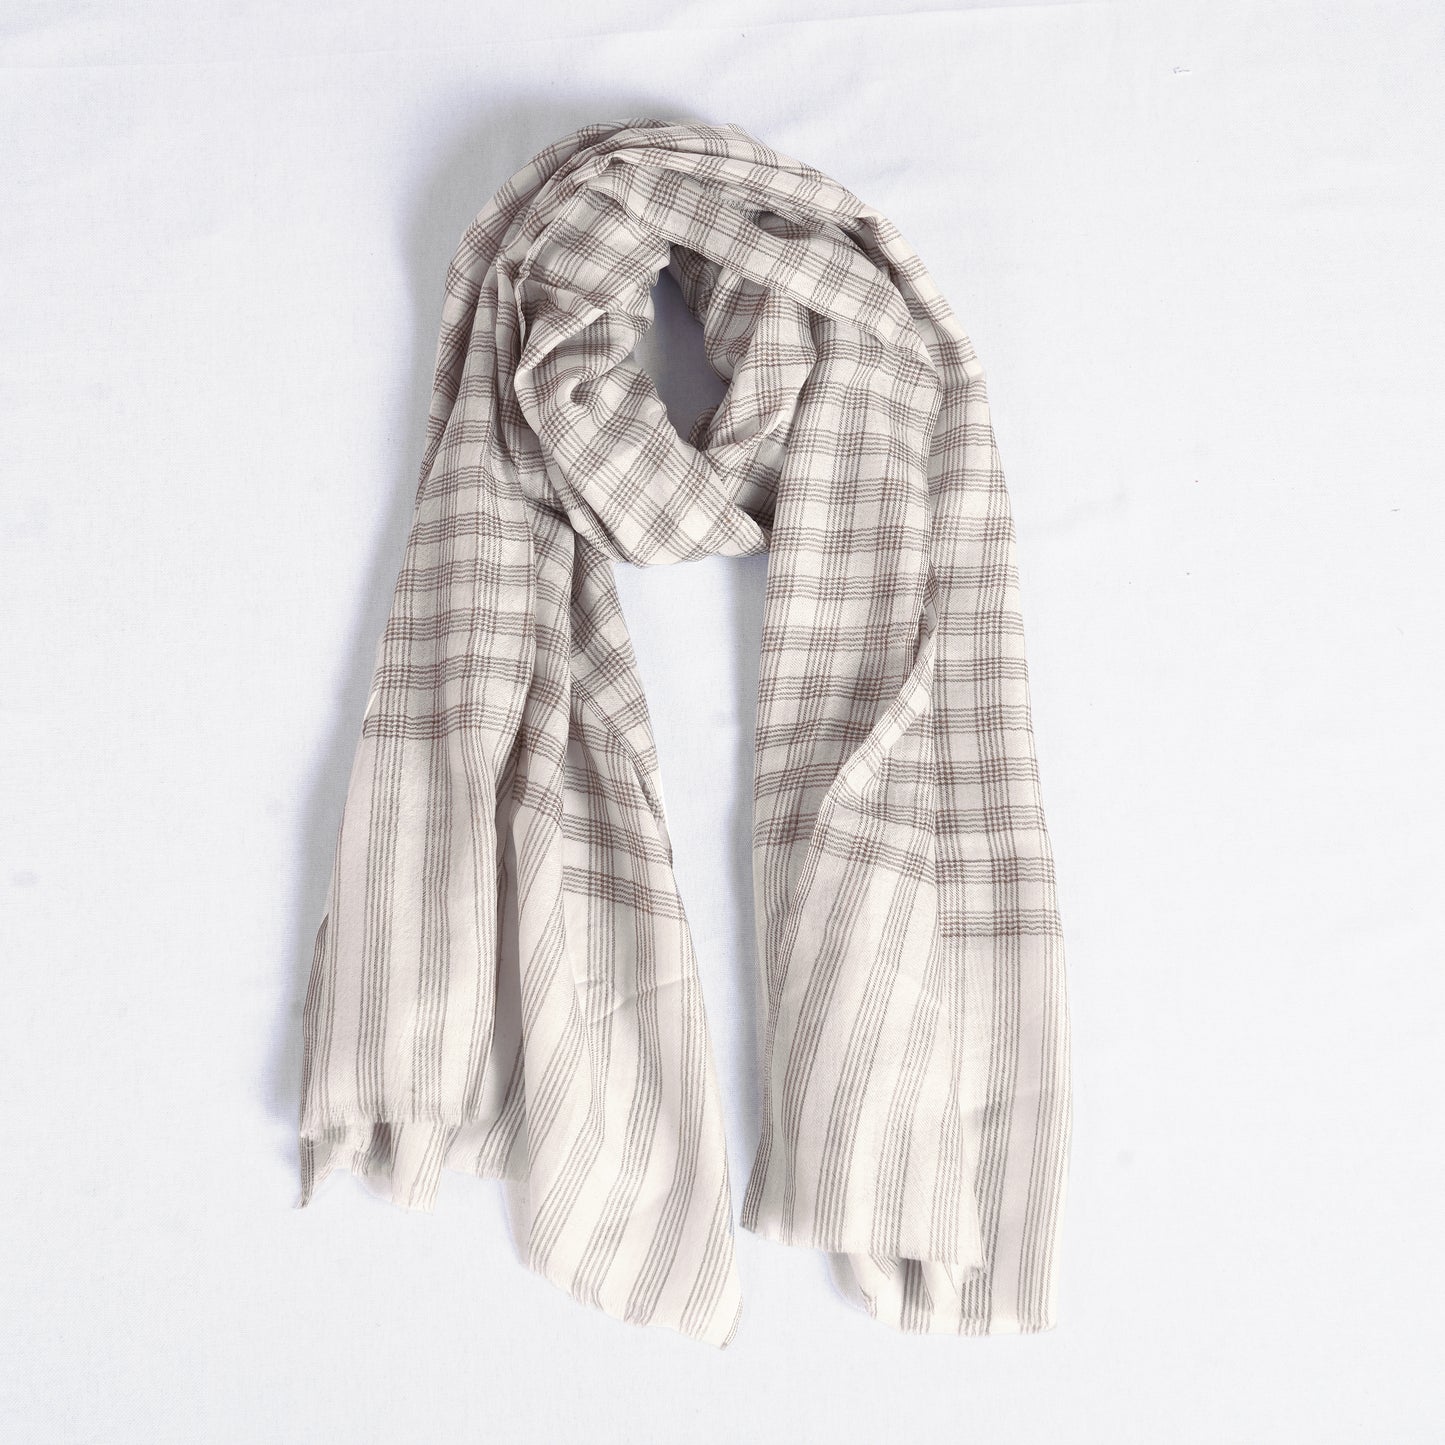 CHECK fine wool blend scarf for men, beige and black colour, reversible, gift for men